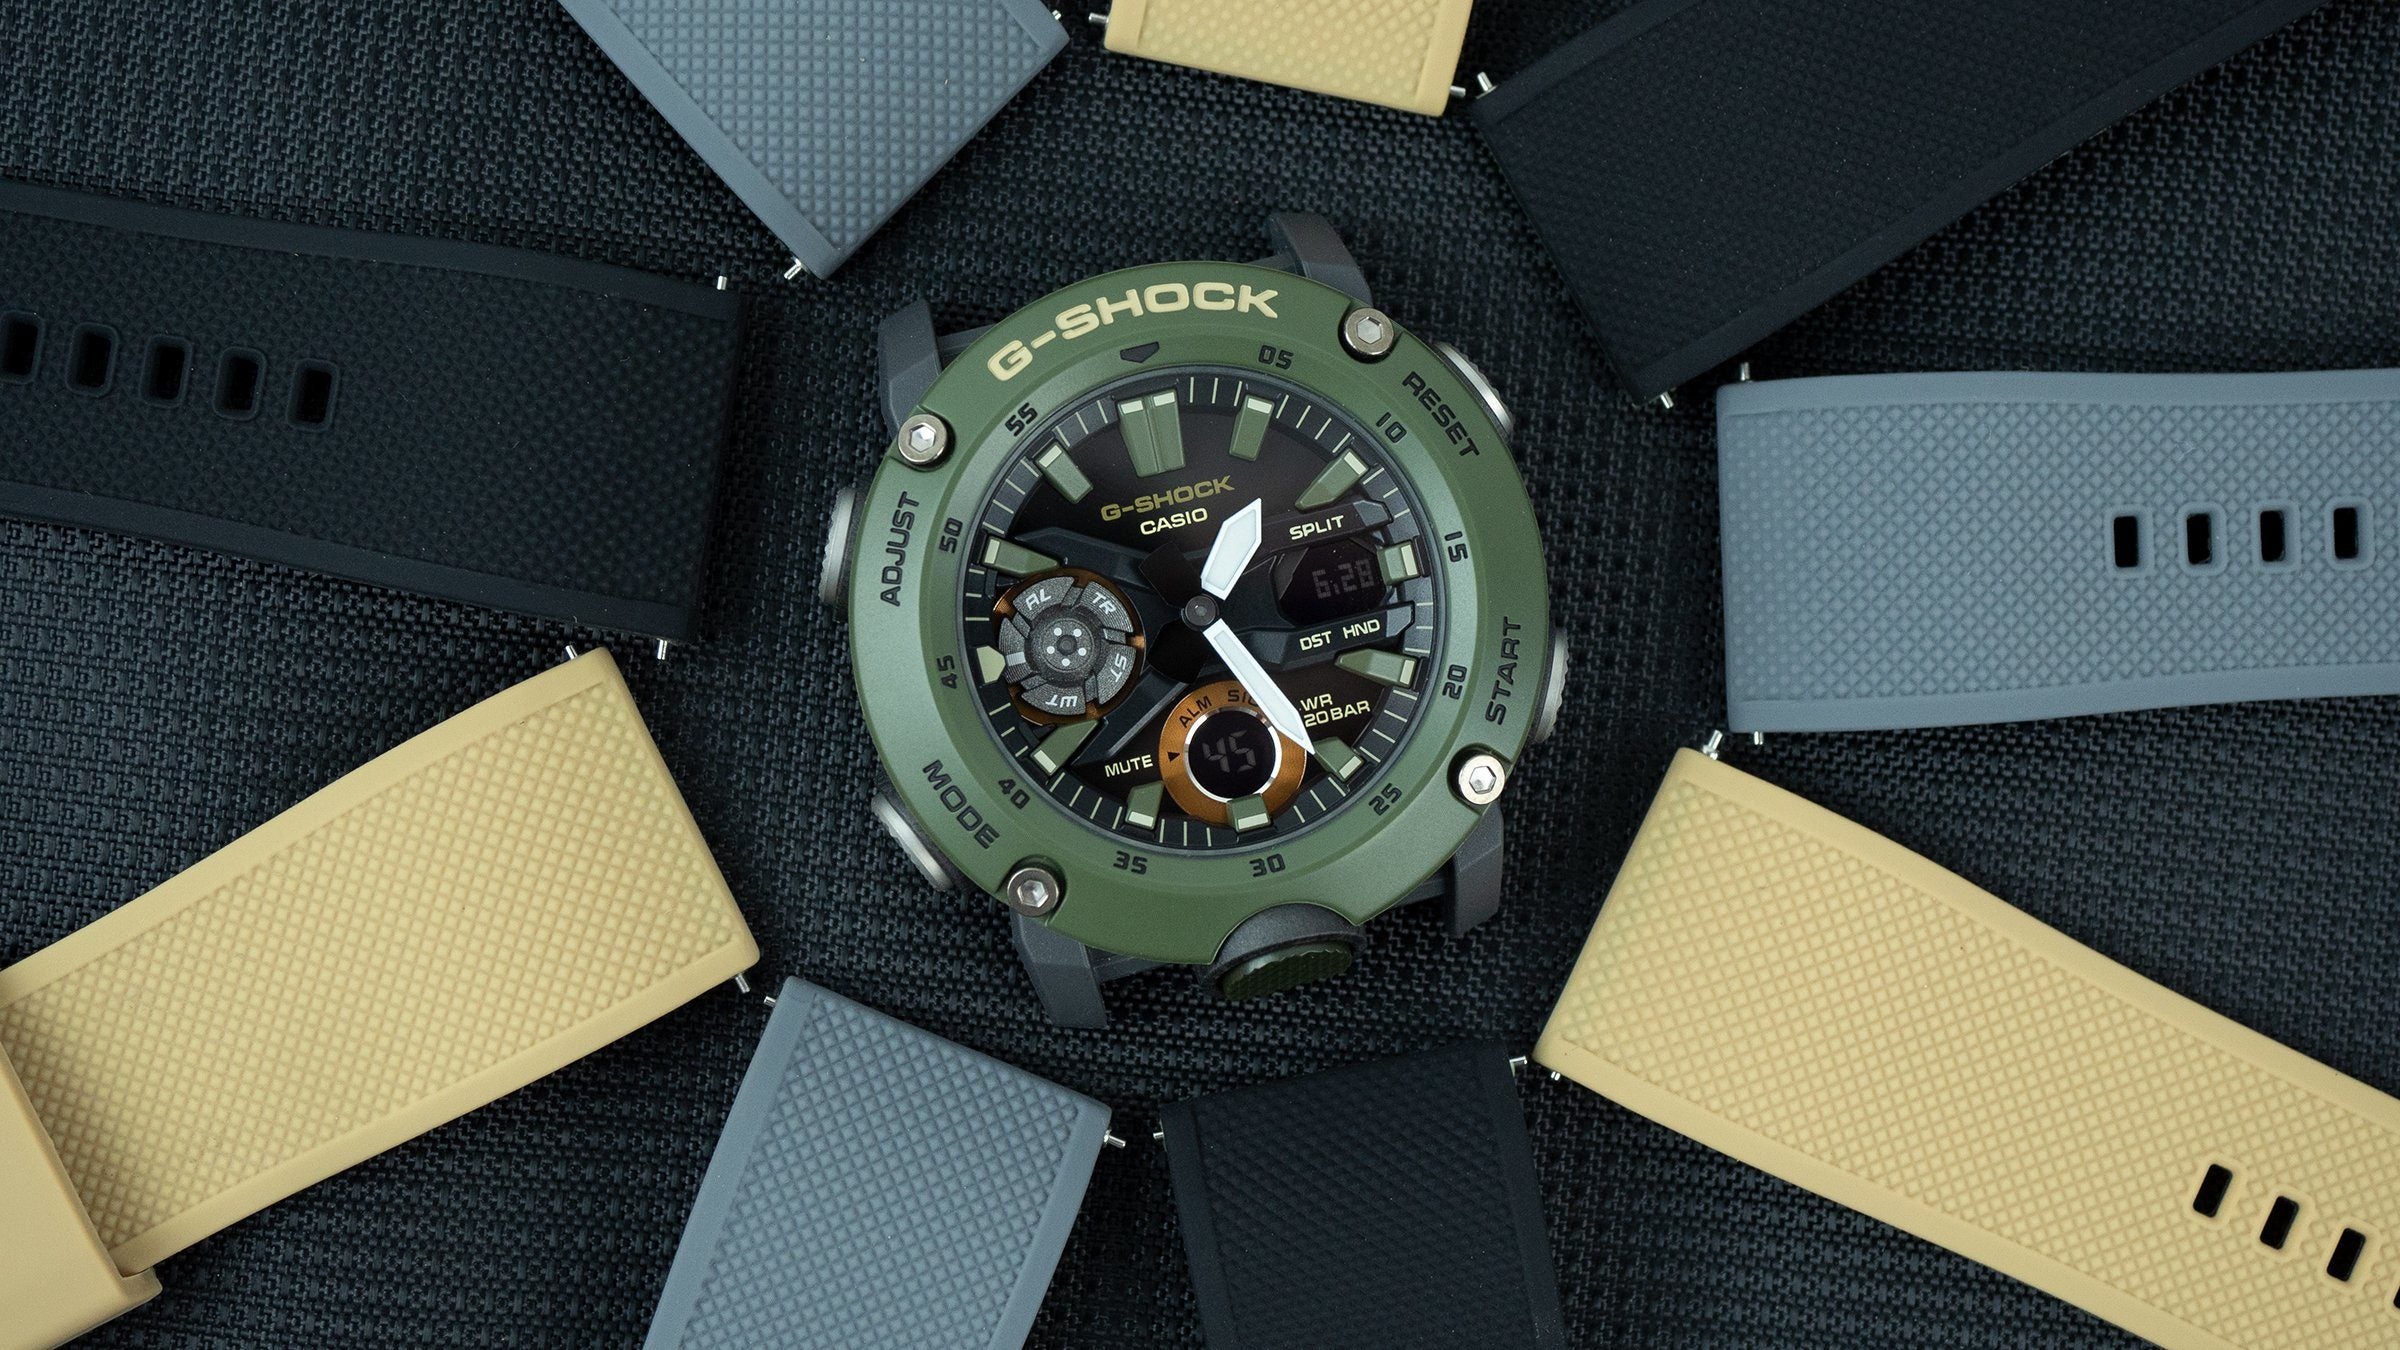 Casio Men's Digital Black and Grey Nylon Strap G-Shock Watch